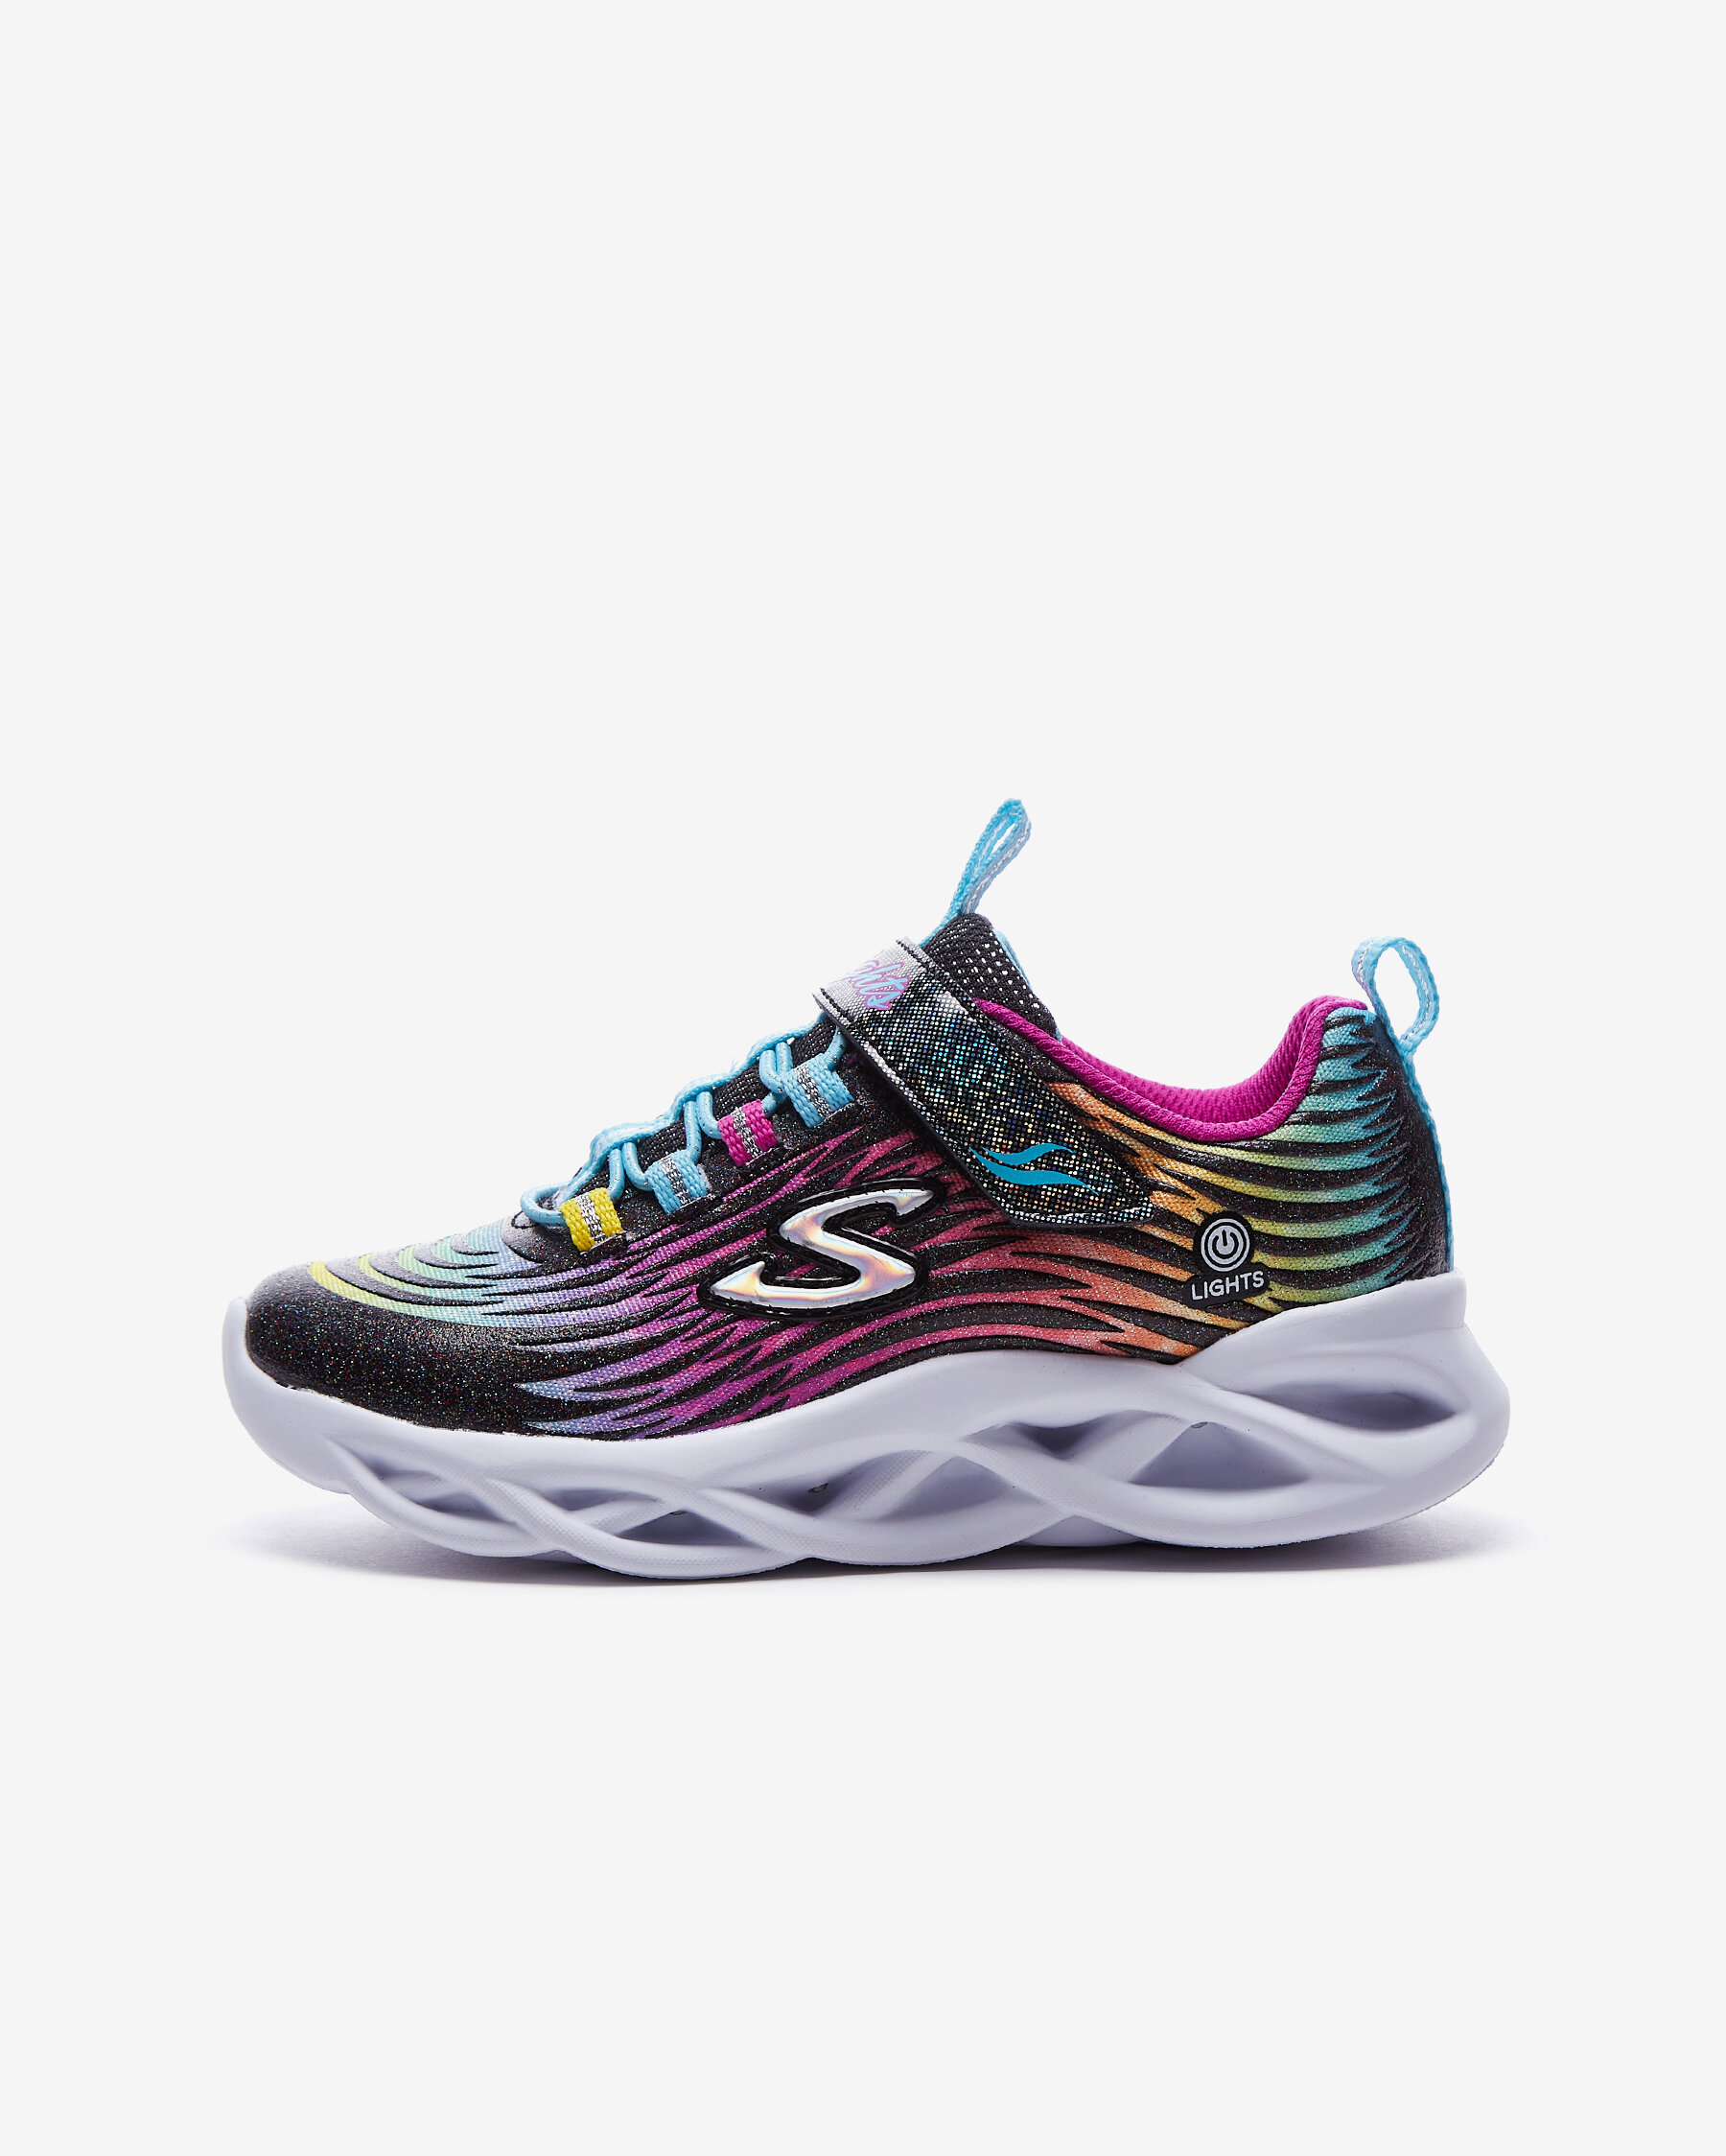 Skechers Twi̇sty Bri̇ghts-Mysti̇cal Siyah Spor Ayakkabı (302321L BKMT)